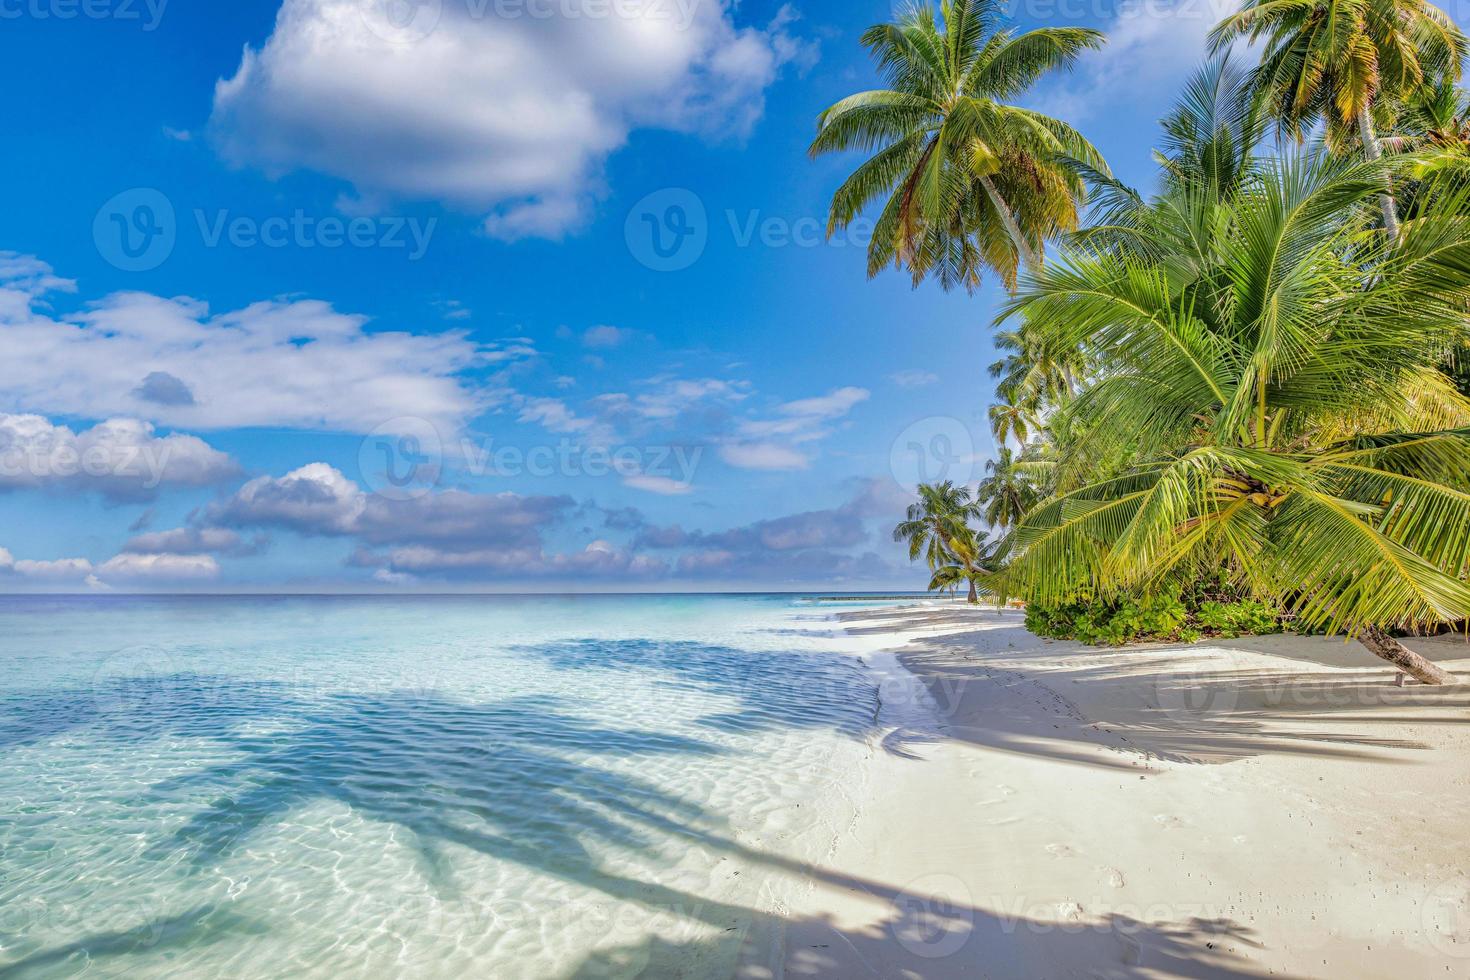 sommar resa bakgrund. exotisk tropisk strand ö, paradis kust. handflatan träd vit sand, Fantastisk himmel hav lagun. fantastisk skön natur bakgrund, solig dag idyllisk inspirera semester foto